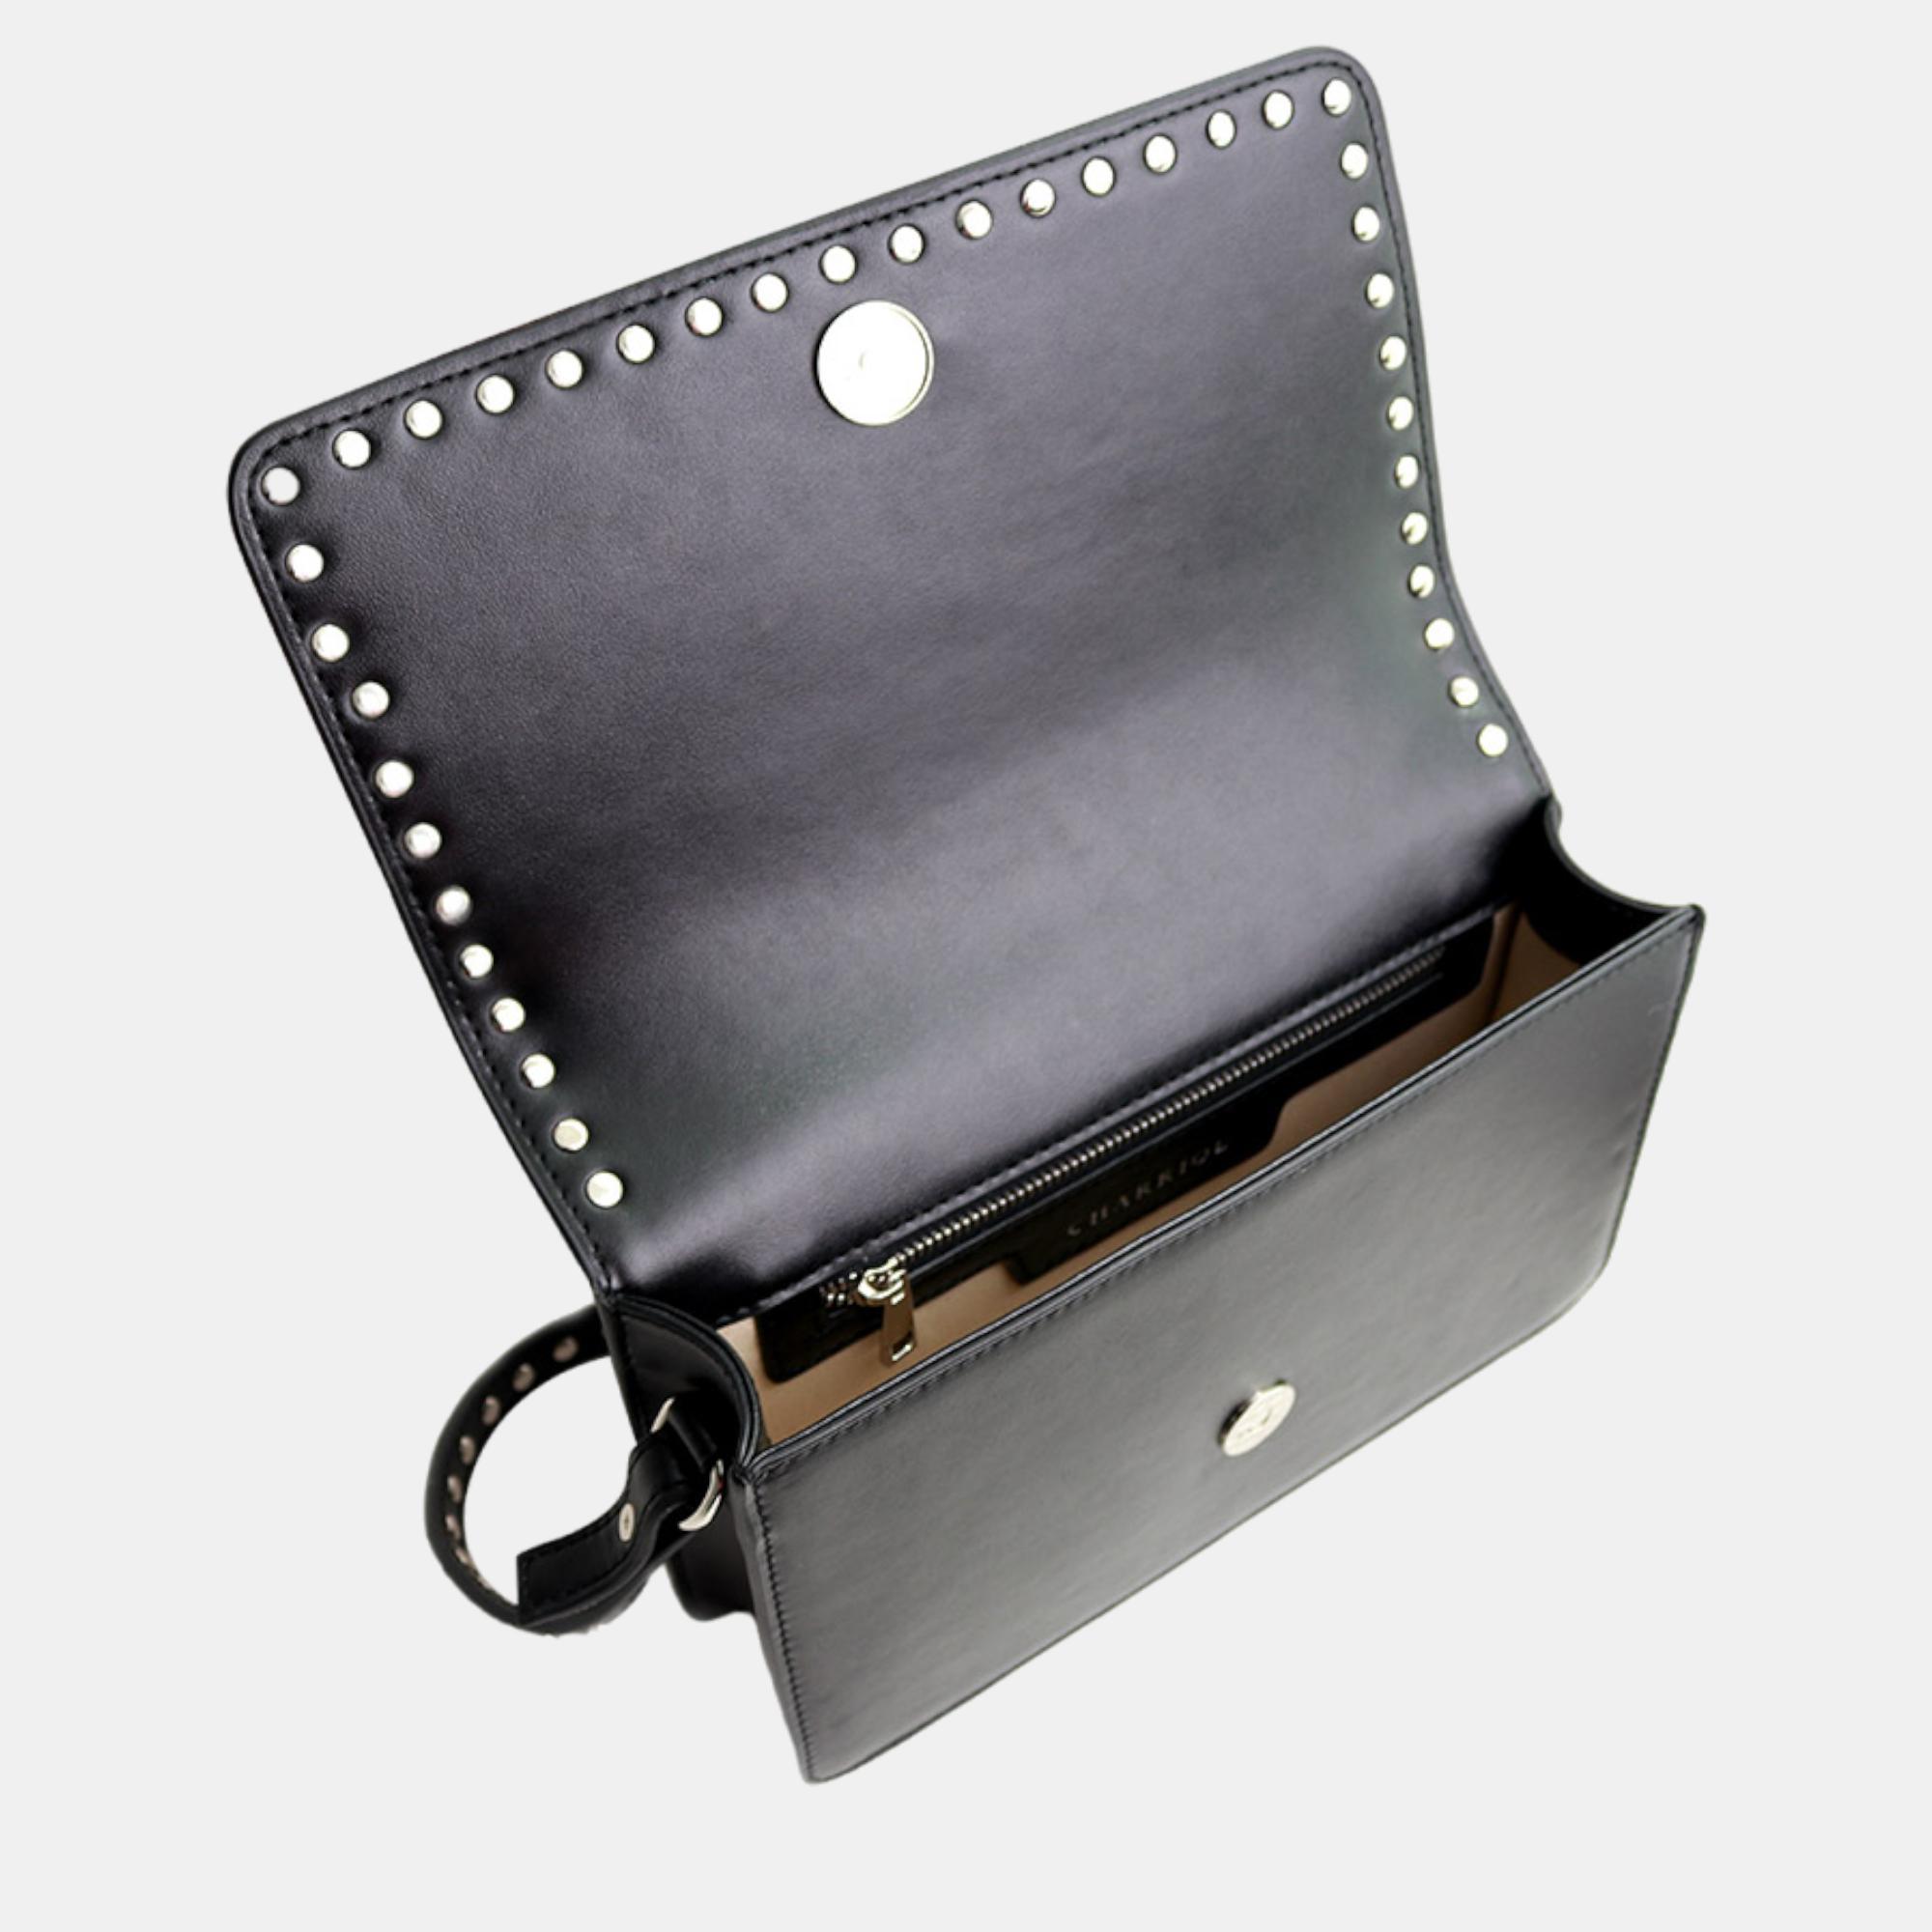 Charriol Black Leather ZenHarmony Handbag